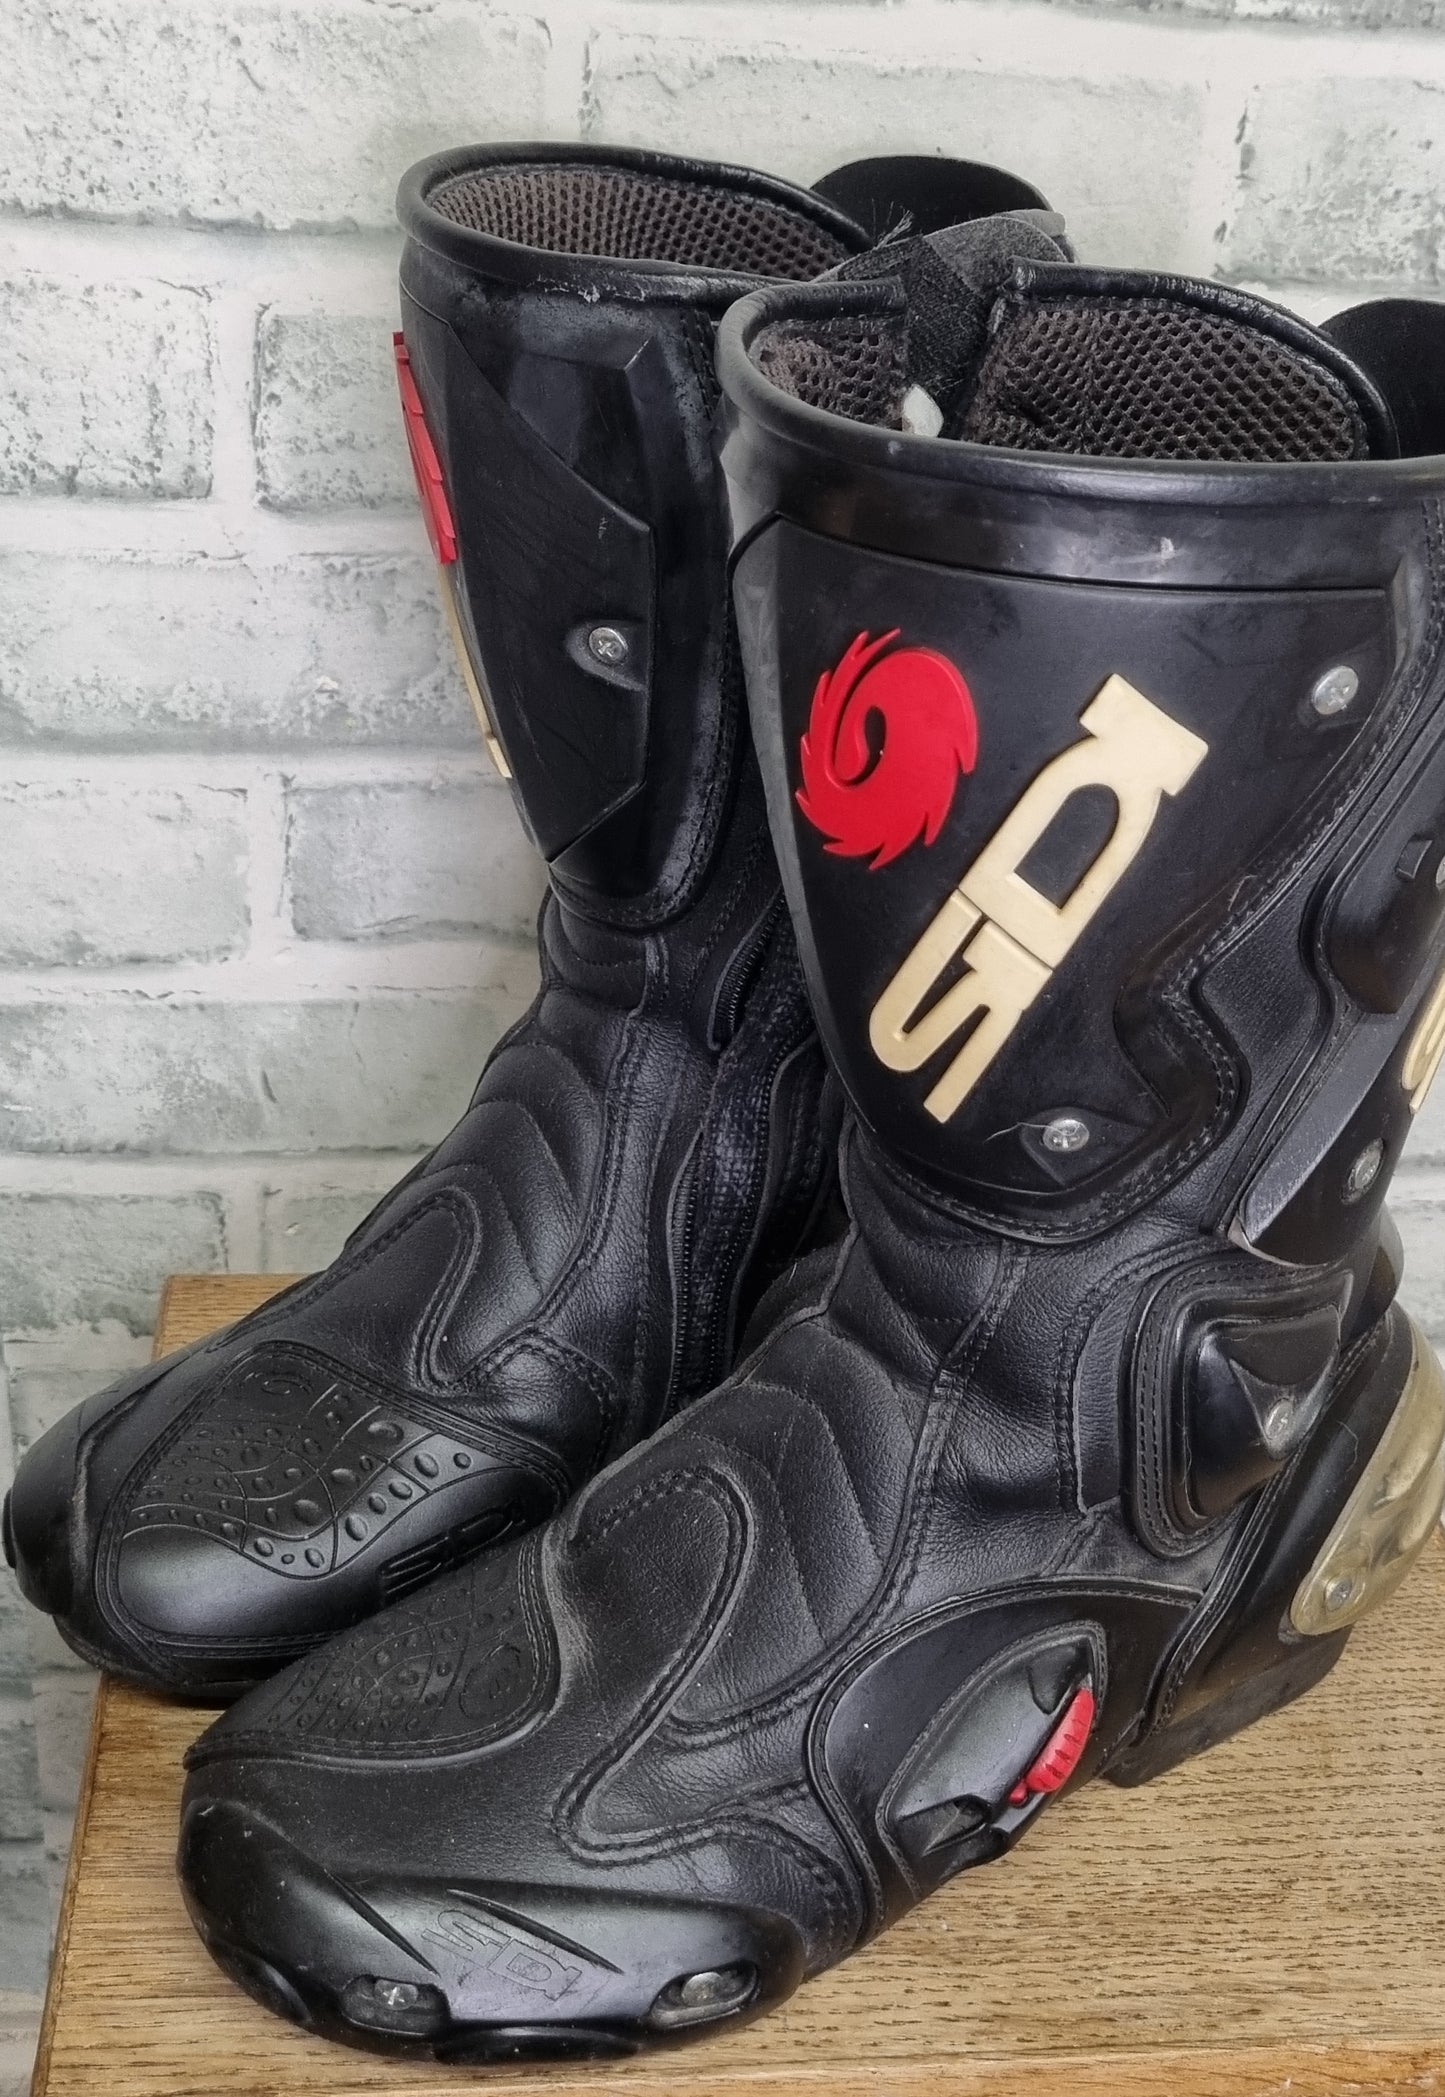 Sidi ST Motorcycle Boots Size 39/5.5